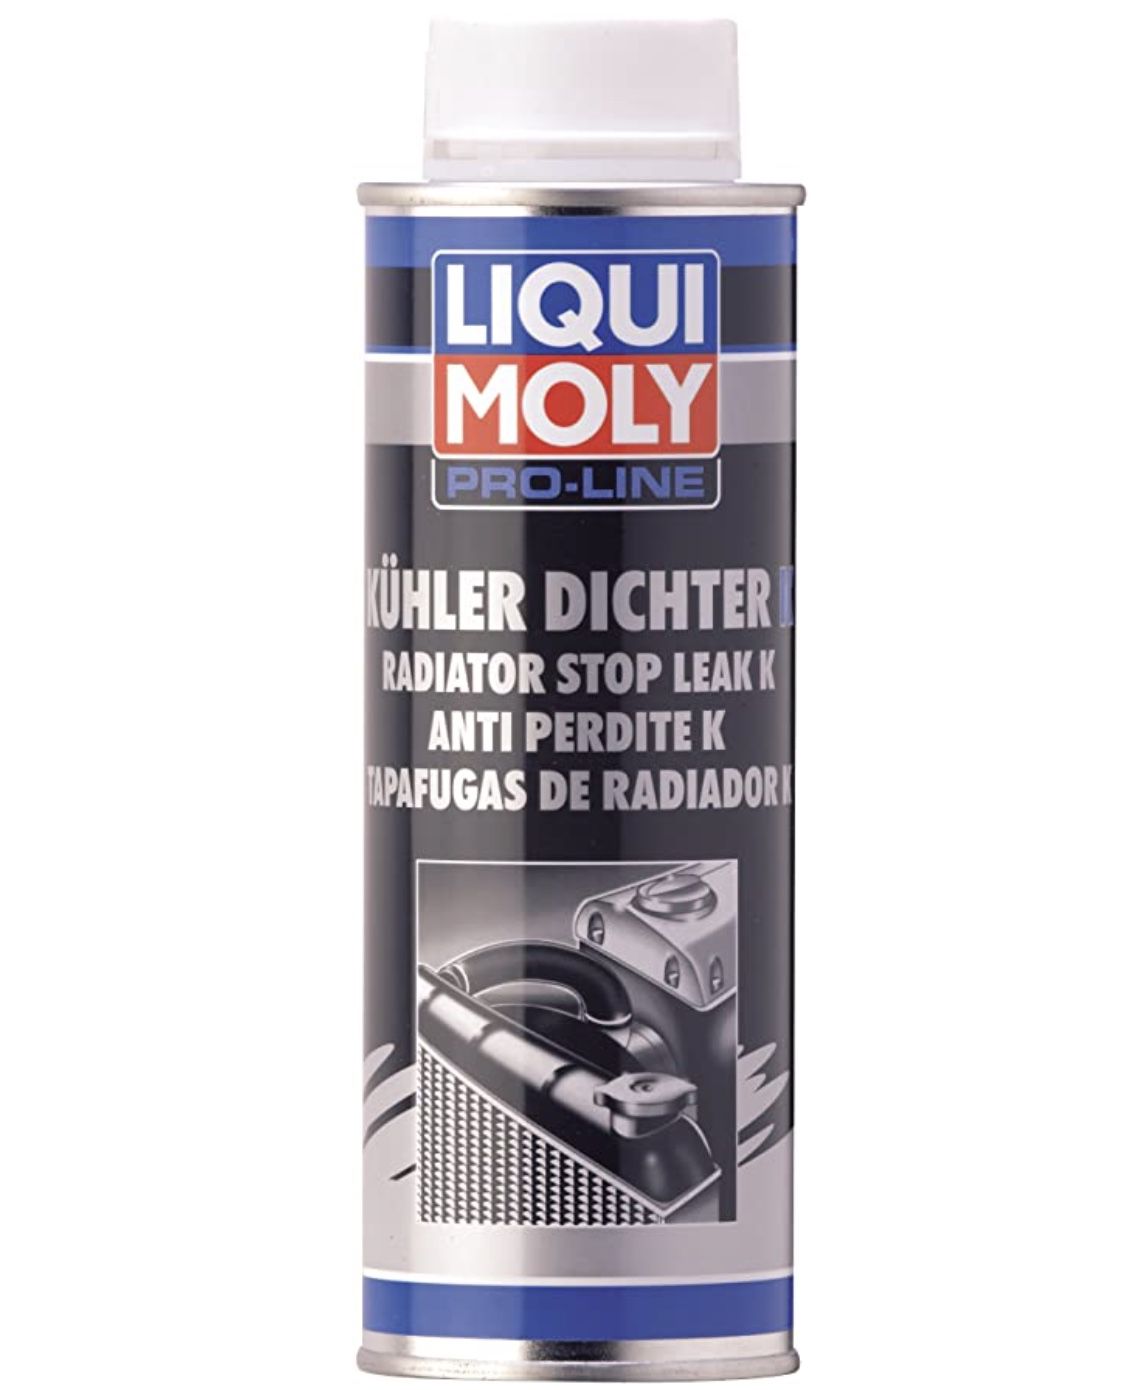 LIQUI MOLY Pro Line Kühlerdichter K (250 ml) für 10,35€ (statt 15€)   Prime